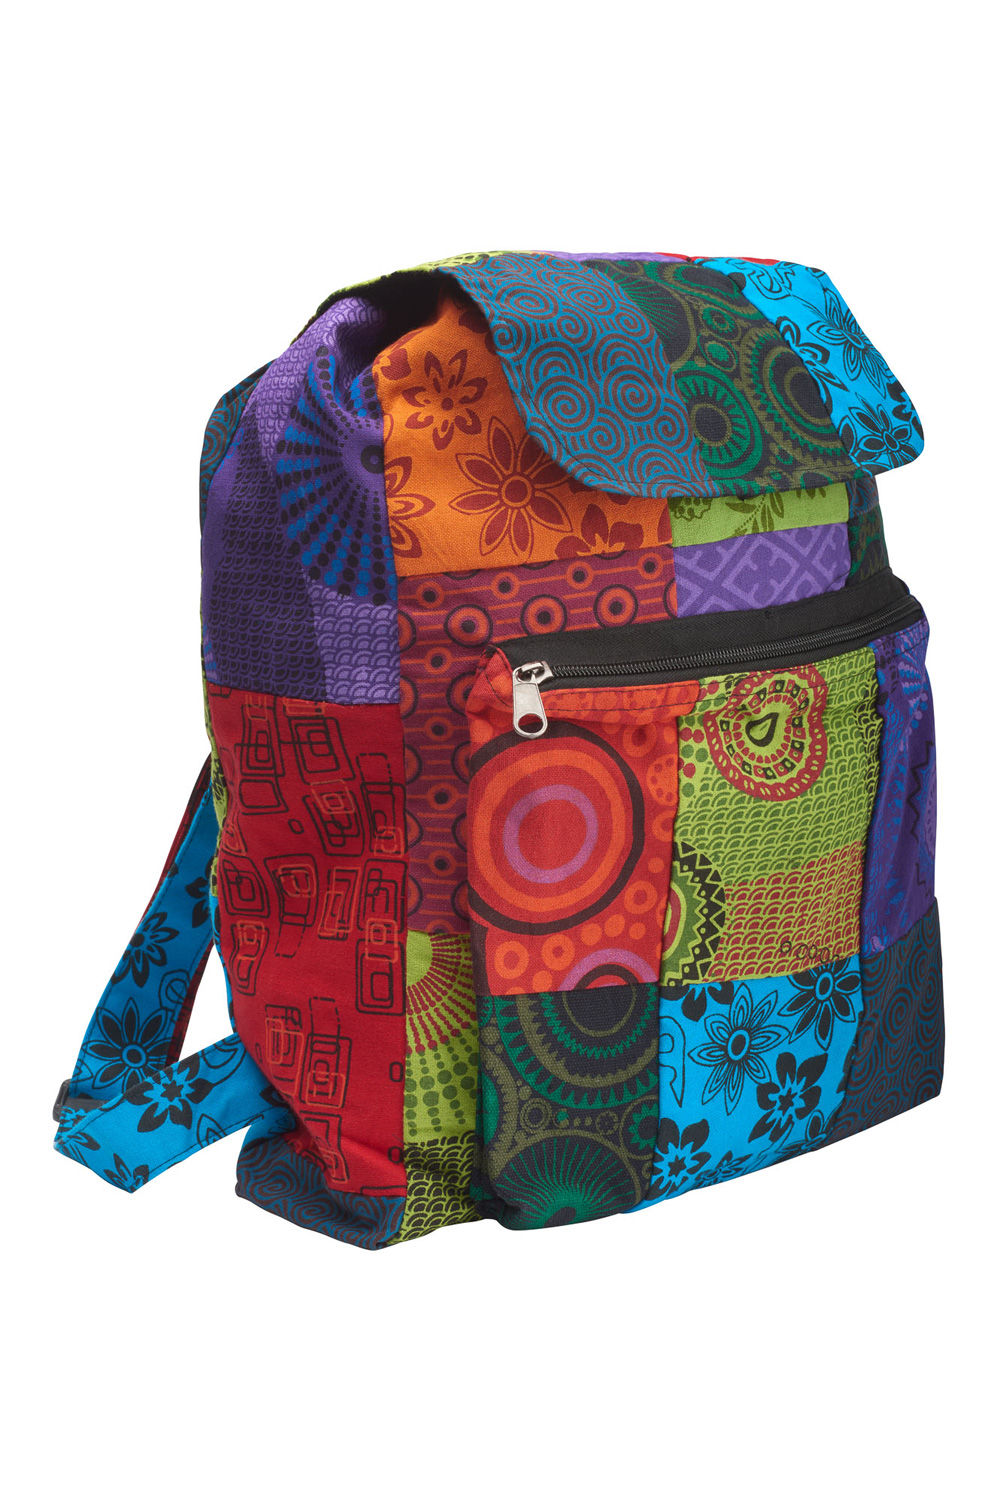 Hippy Festival Bag, Boho, Upcycled Art, made by The Purple Hippy